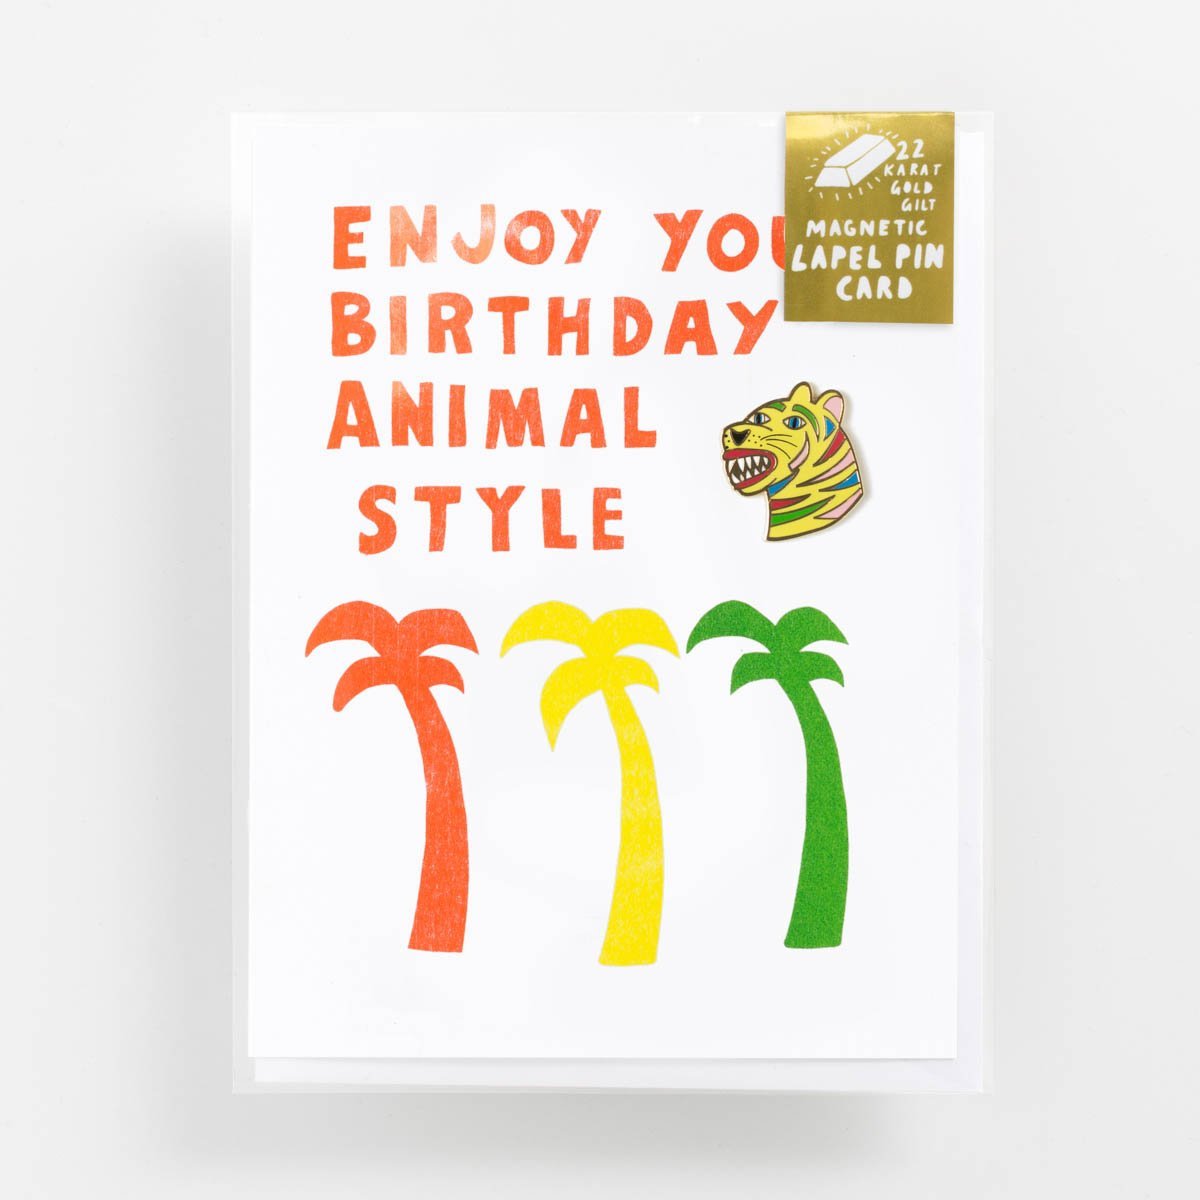 Animal Style Birthday - Lapel Pin Card - Yellow Owl Workshop